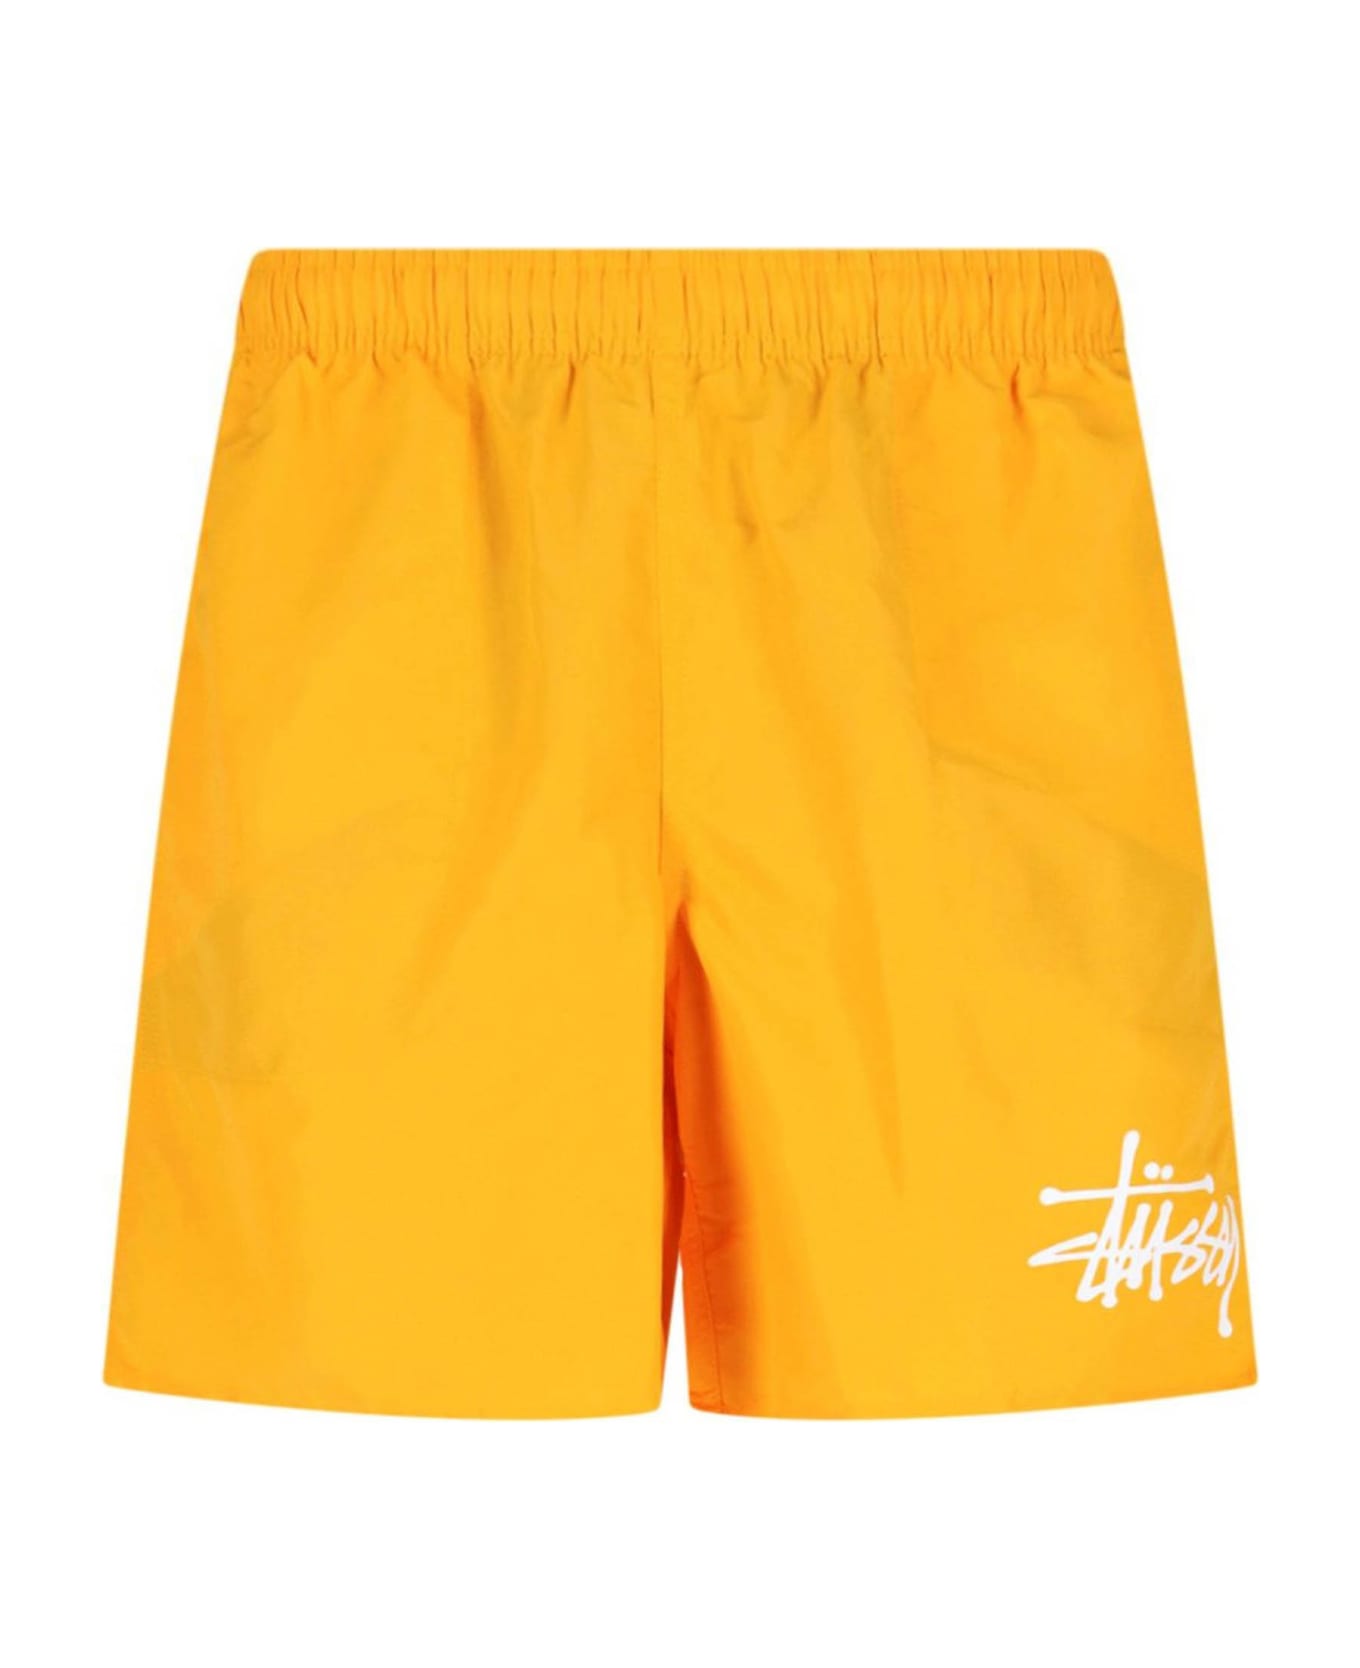 Stussy Orange Swimming Shorts | italist